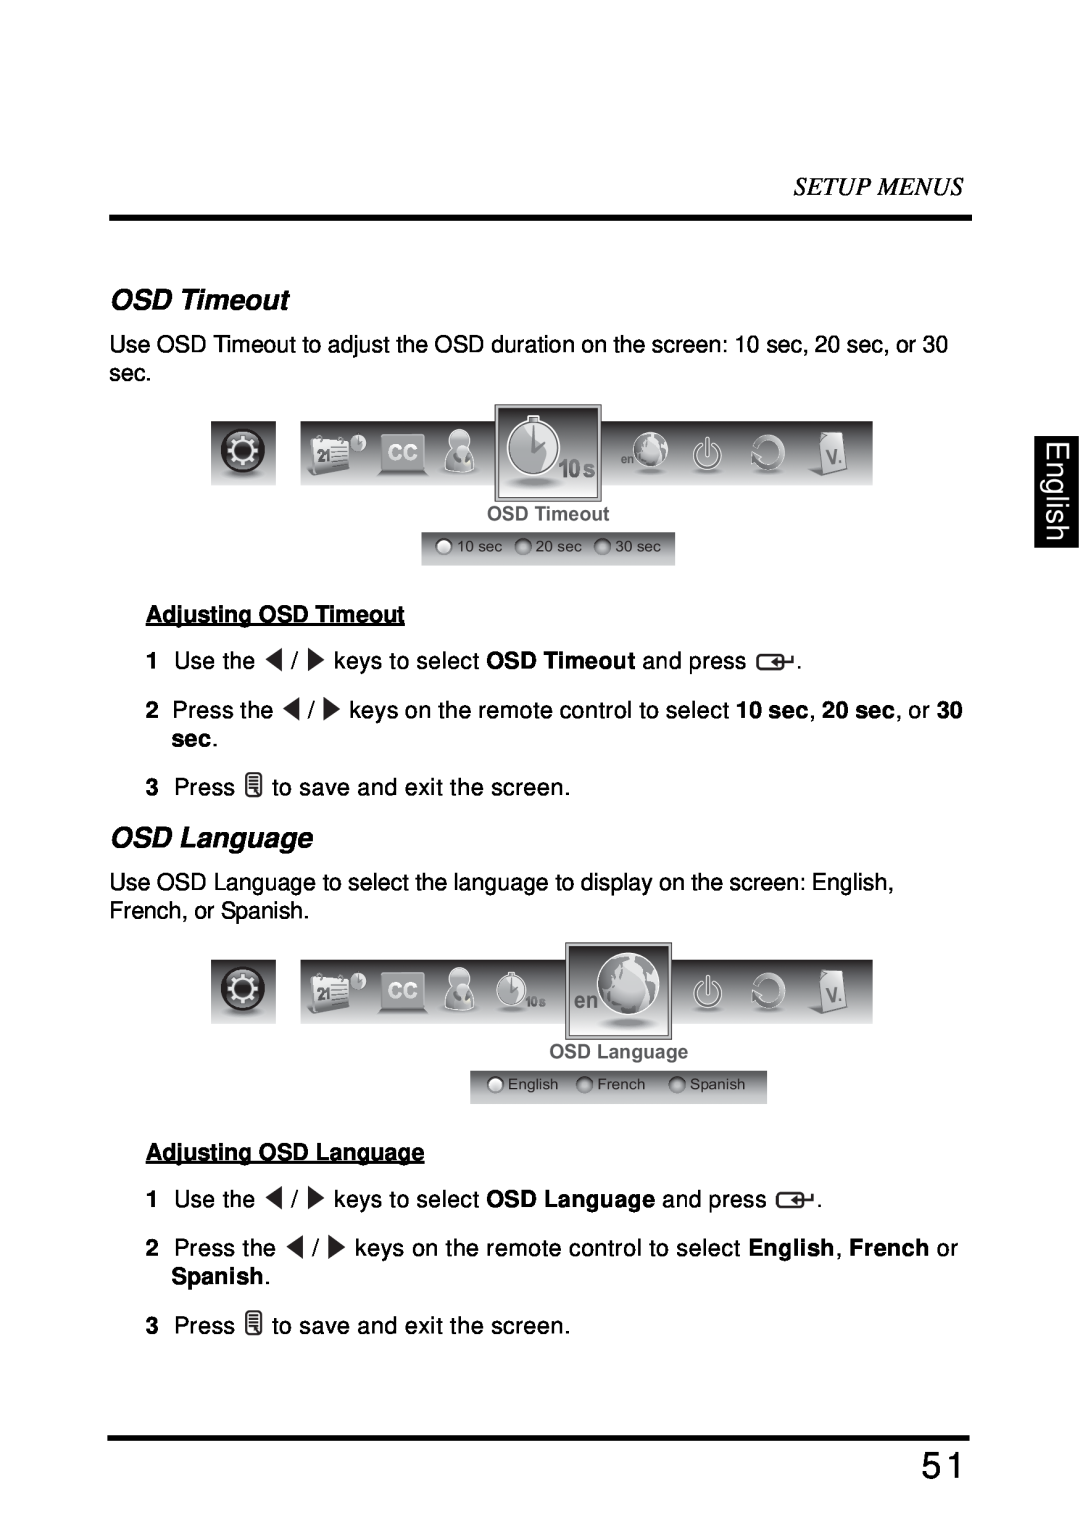 Westinghouse LD-4680 user manual English, Setup Menus, Adjusting OSD Timeout, Adjusting OSD Language 